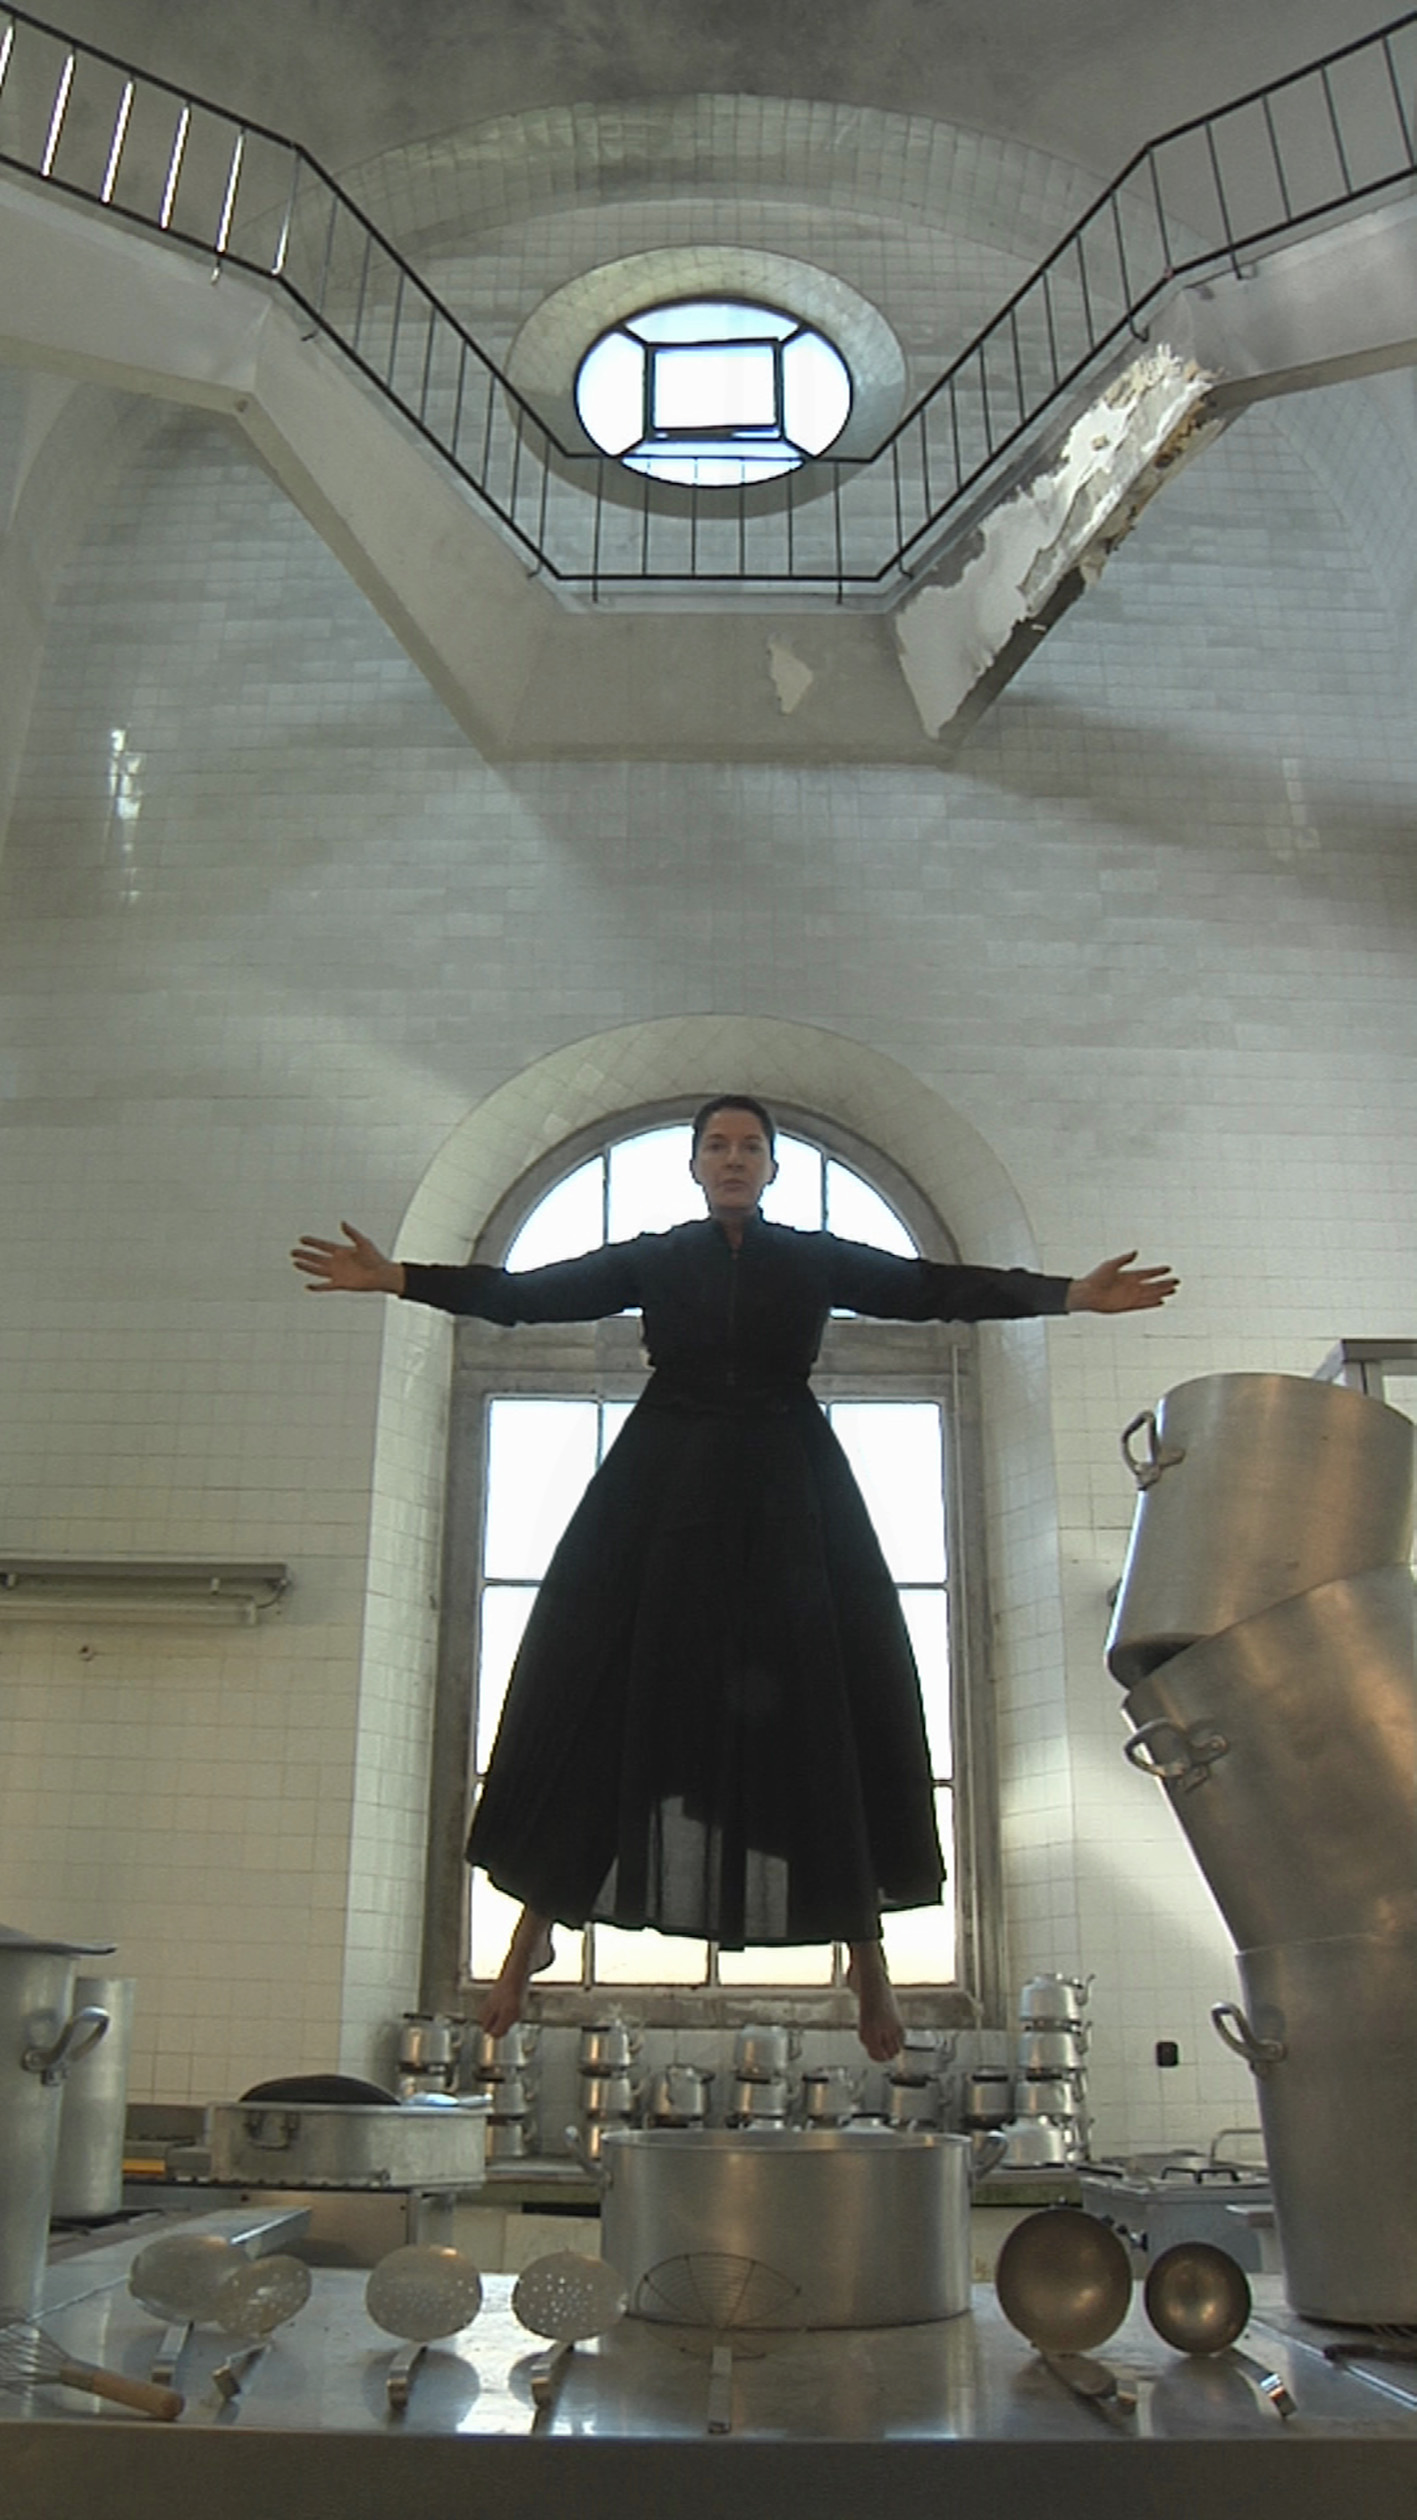 Marina Abramović, The Kitchen I Levitation of Saint Theresa filmstill, 2009, LIMA, Amsterdam